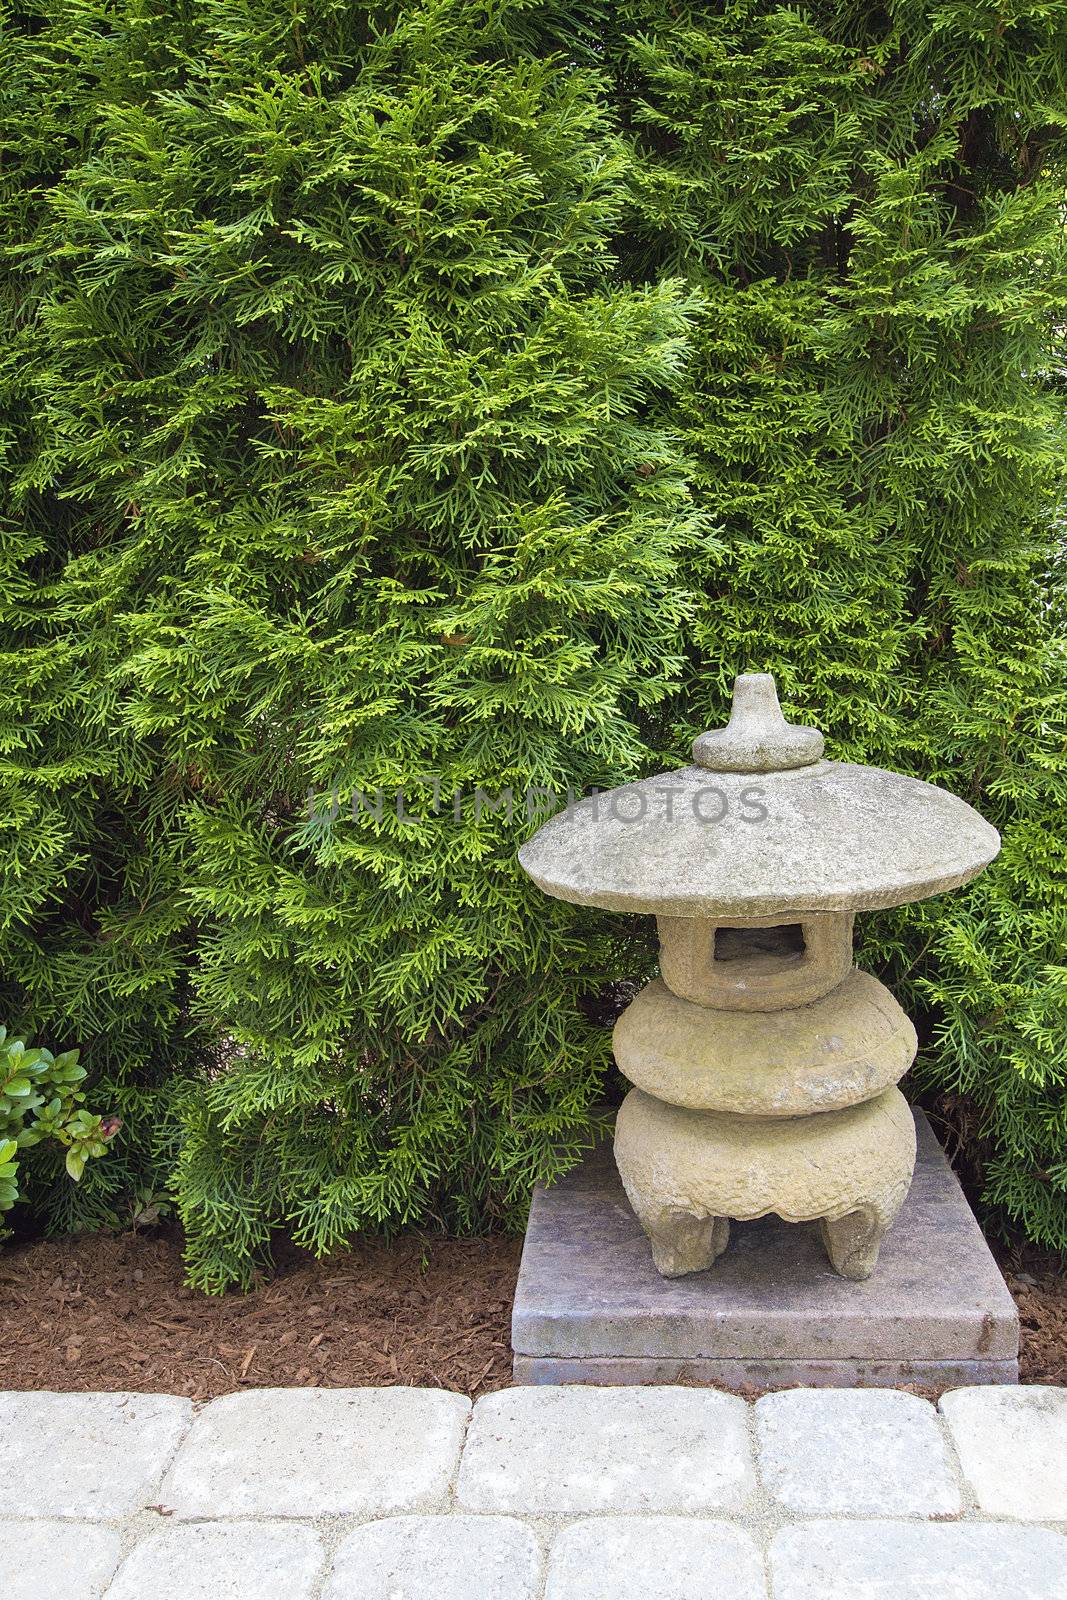 Japanese Stone Pagoda in Backyard Garden Paver Patio